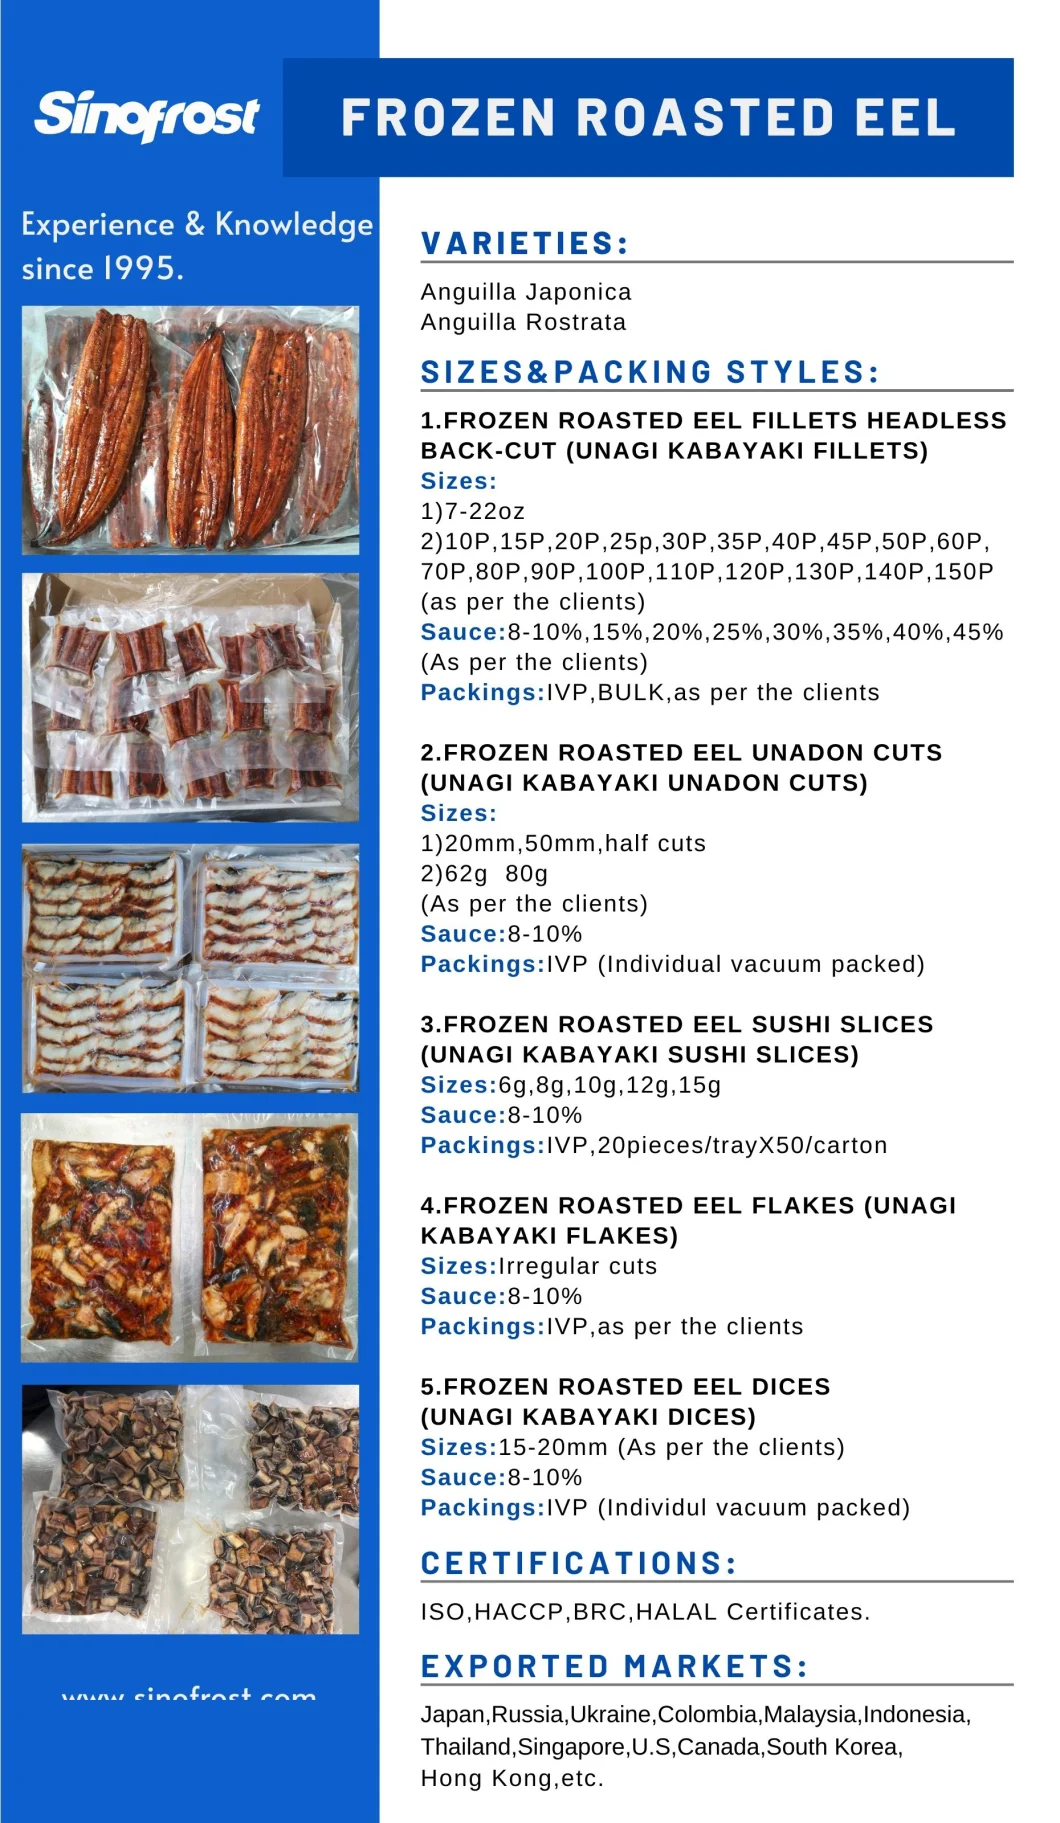 Unagi Kabayaki,Unagi Cuts,Unadon Cuts,Unagi Sushi Slices,Unagi Dices,Unagi Flakes,Frozen Roasted Eel,Frozen Broiled Eel,Frozen Prepared Eel,Packed in Bulk/Ivp